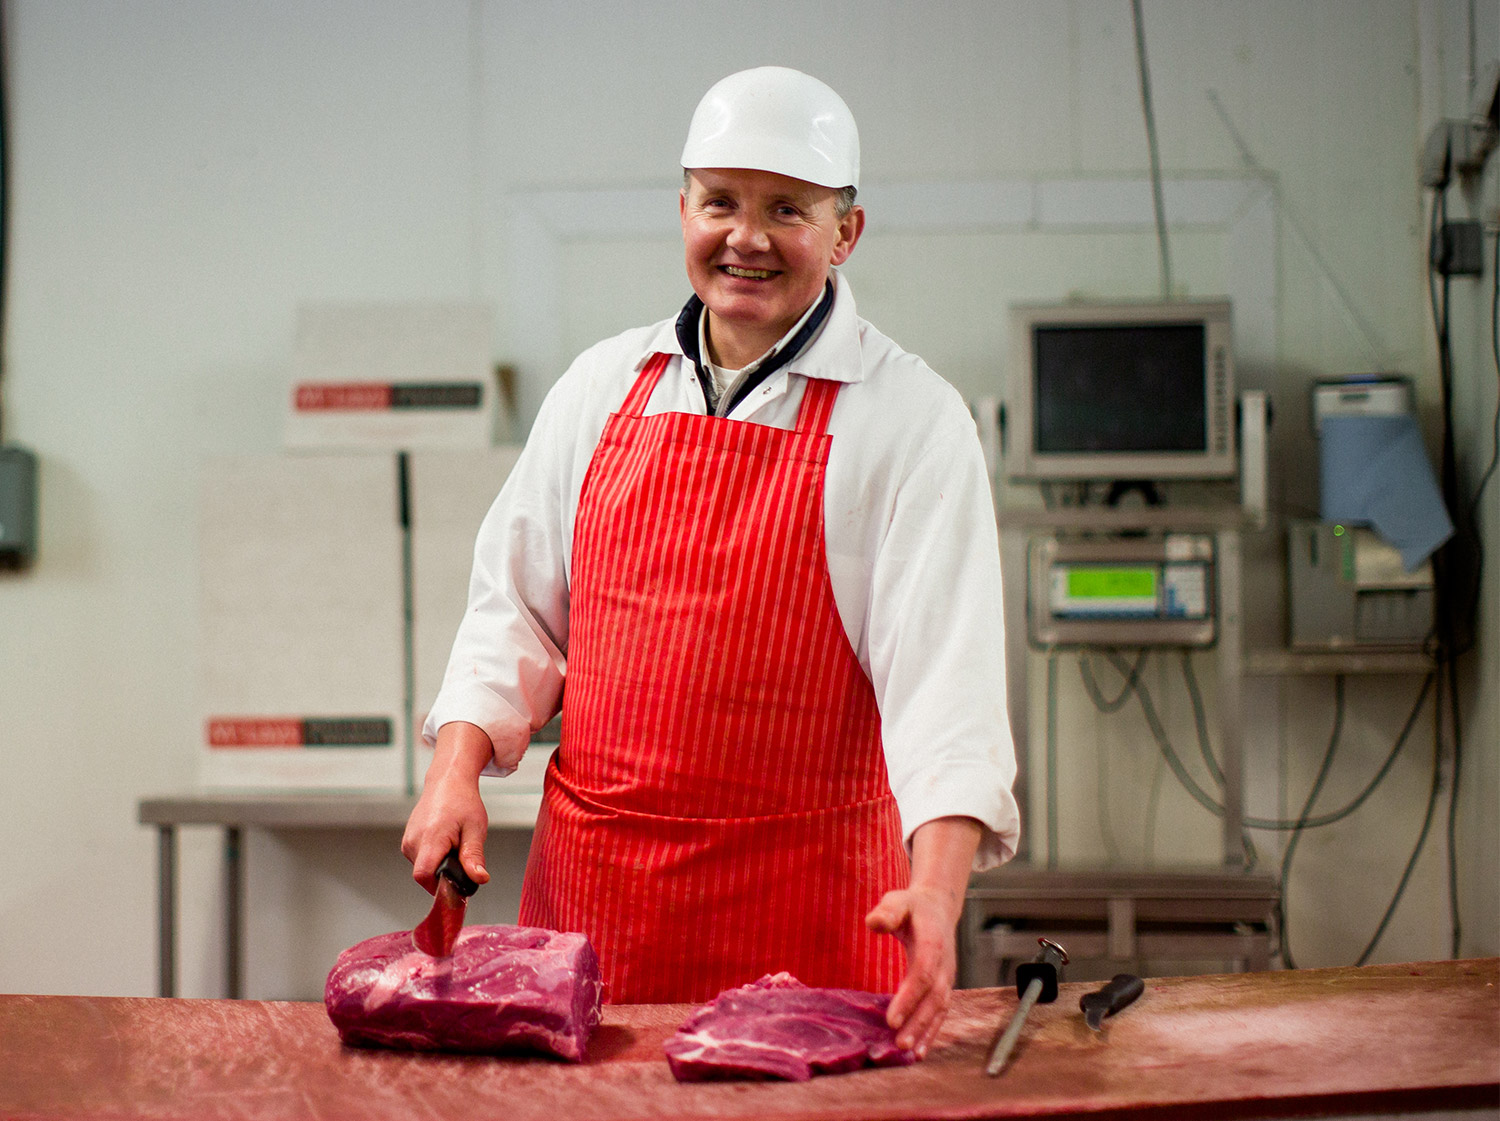 McLays butcher cutting meat